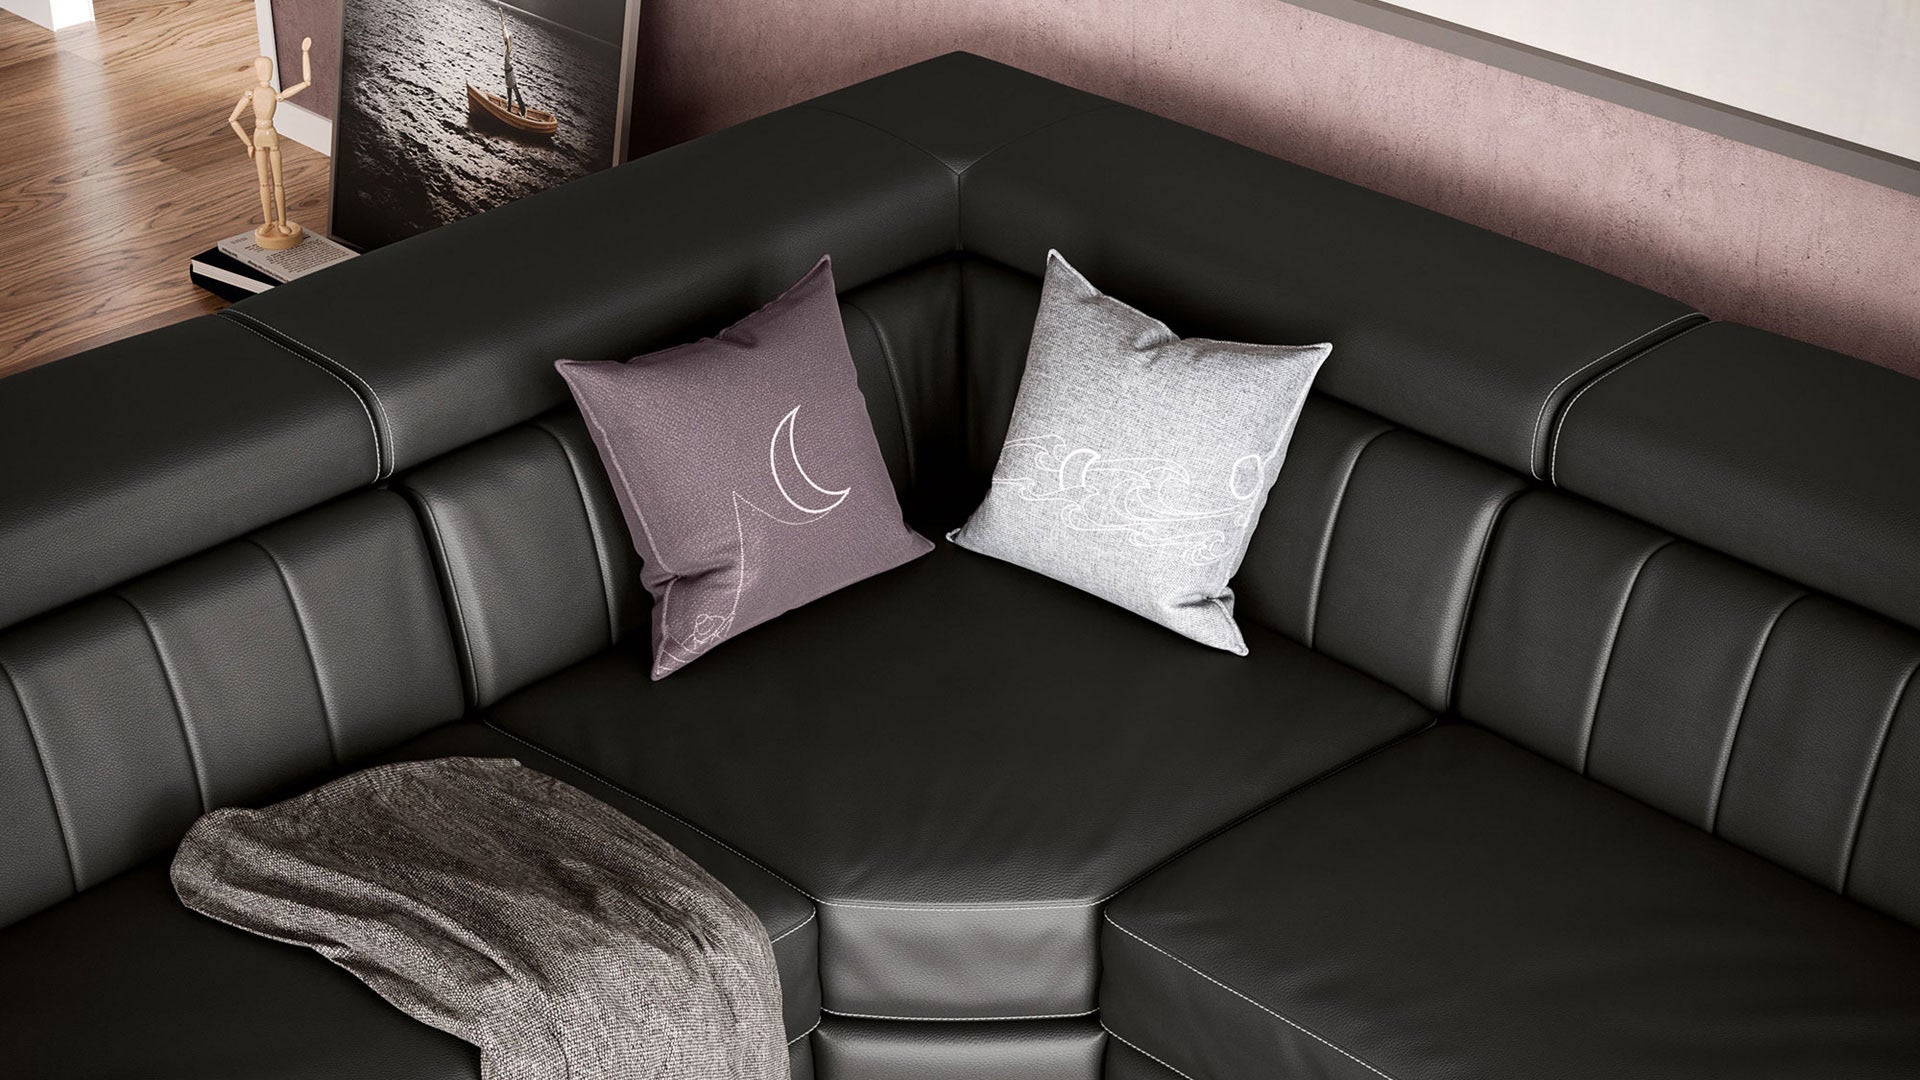 Natuzzi Forza Modular Corner Sofa w/Relax Function